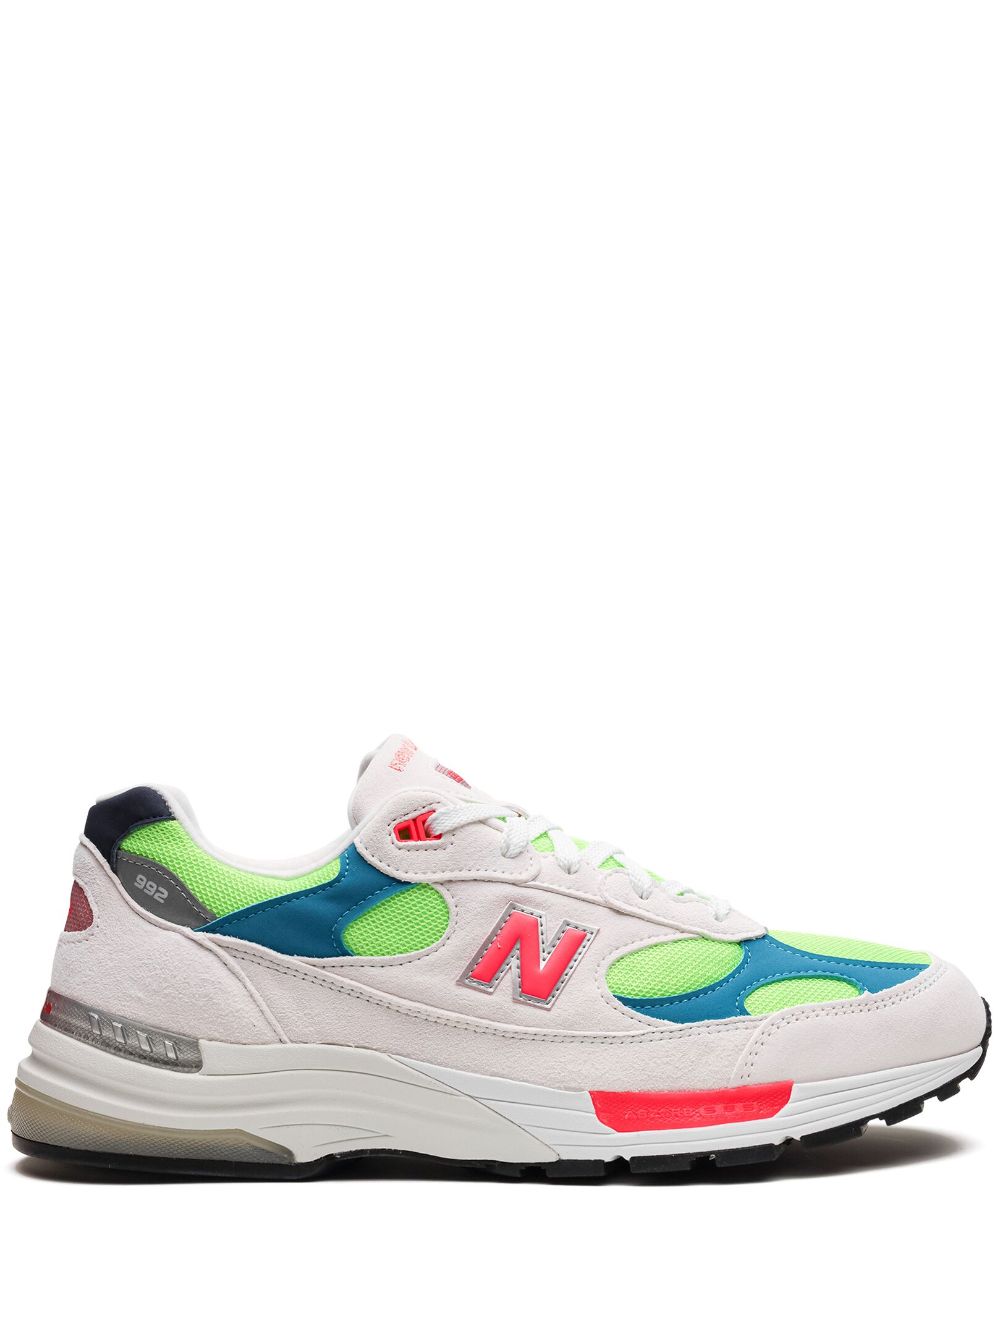 New Balance 992 "White Neon Cyan" sneakers von New Balance